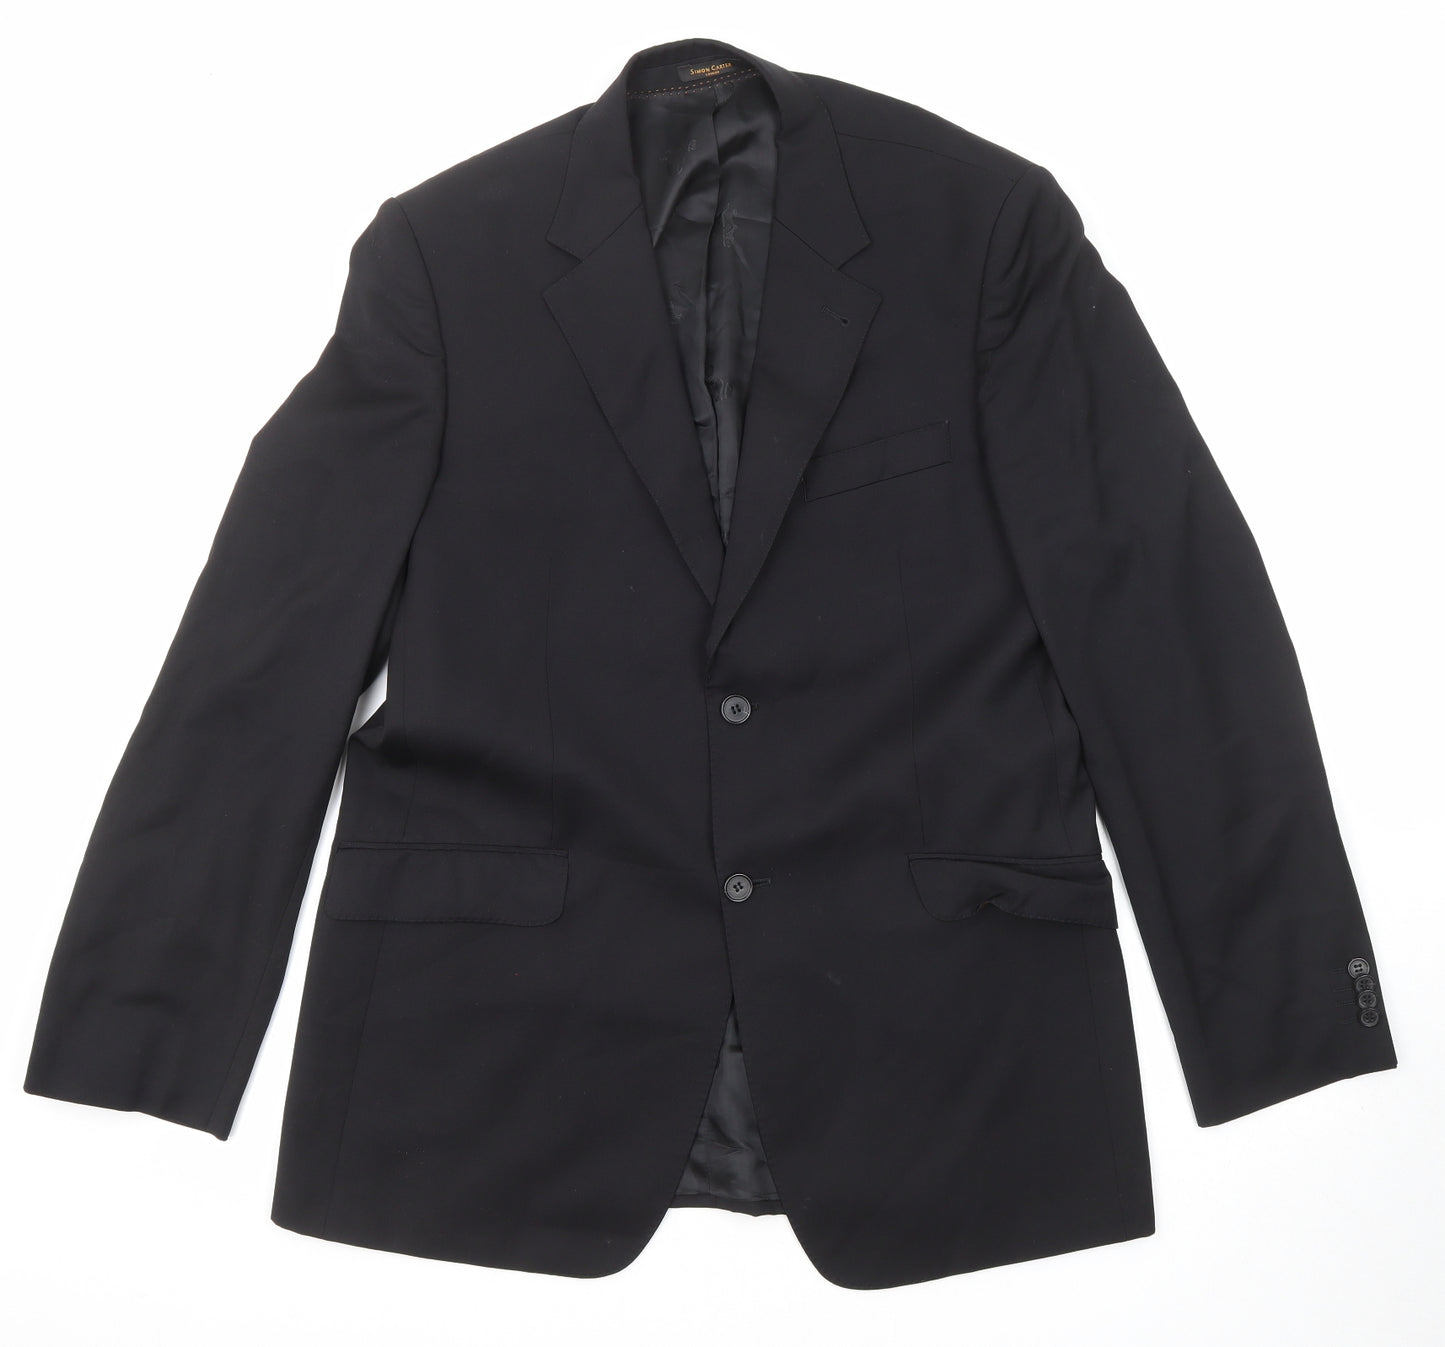 Simon Carter Mens Black Polyester Jacket Suit Jacket Size 40 Regular